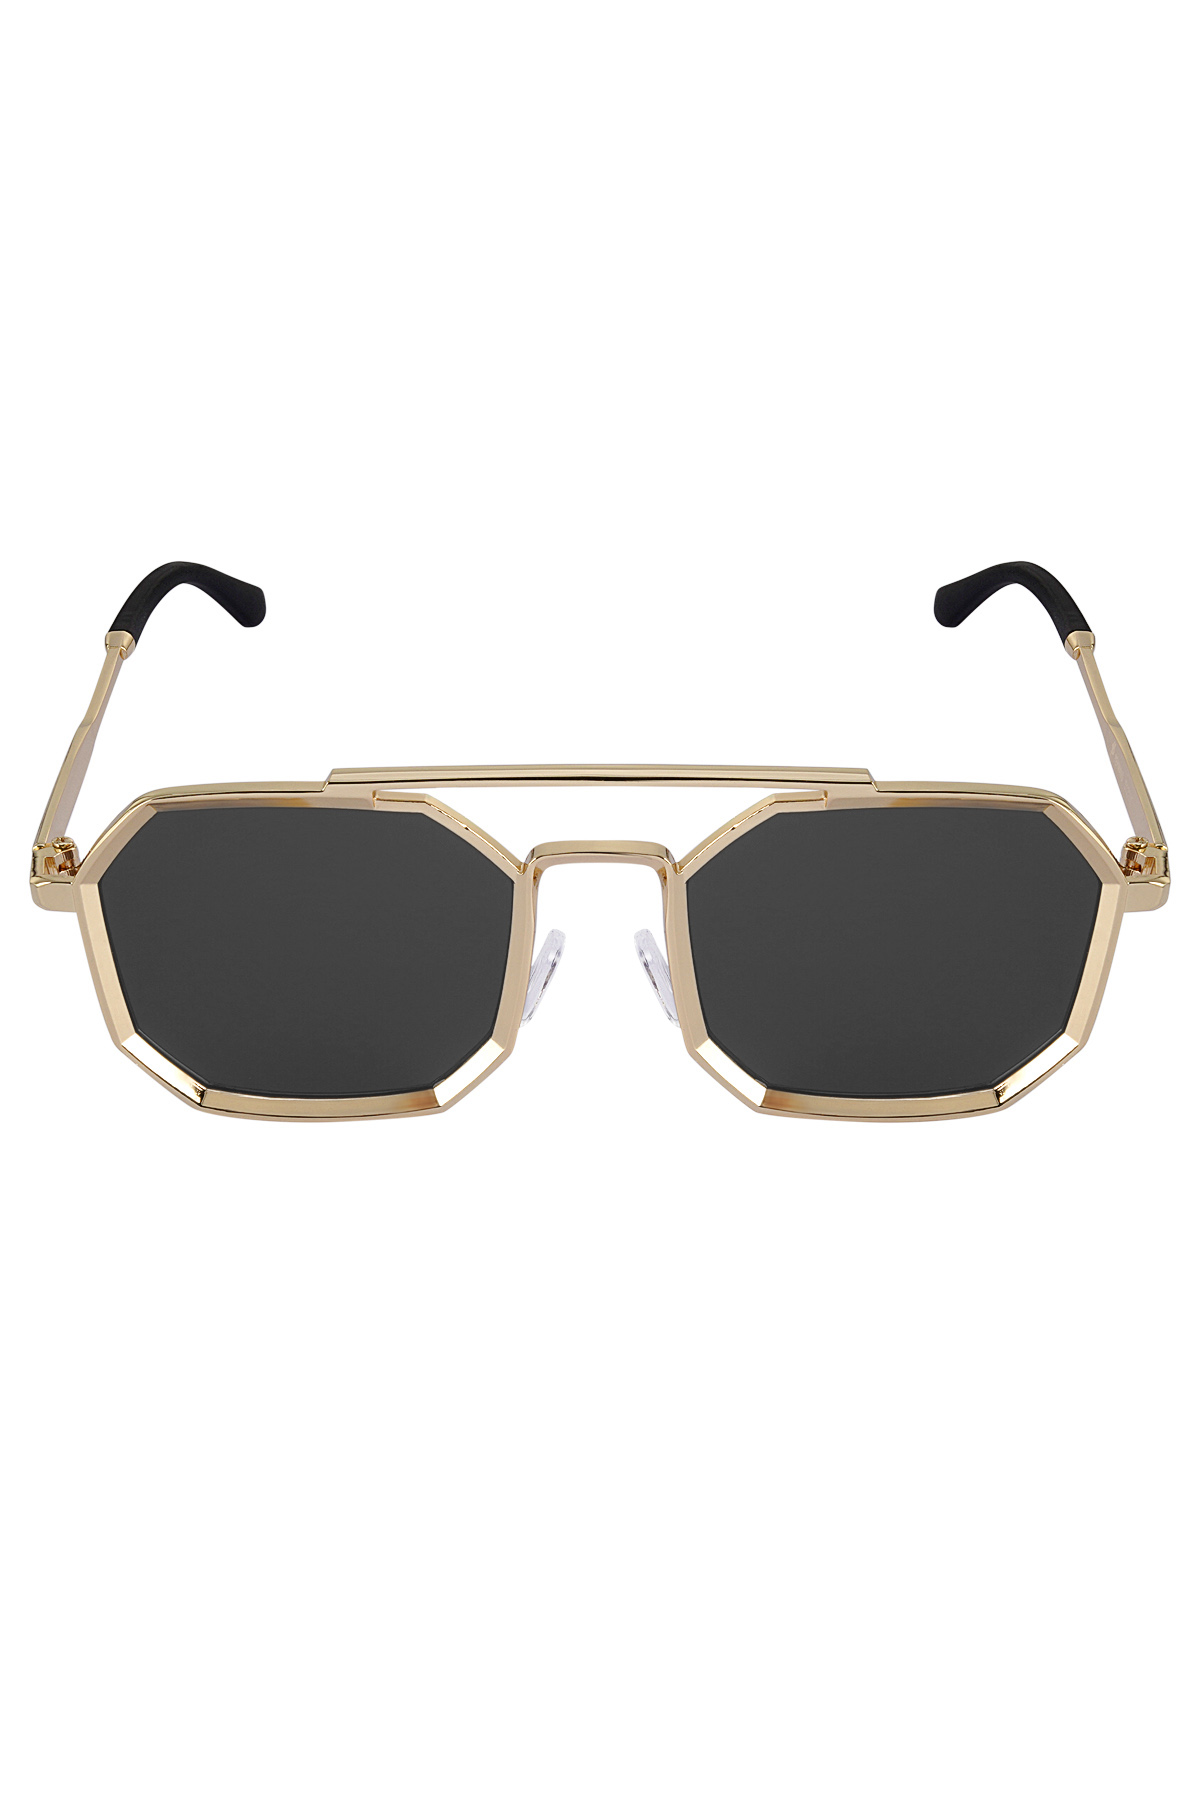 Sunglasses LuminLens - black gold h5 Picture4